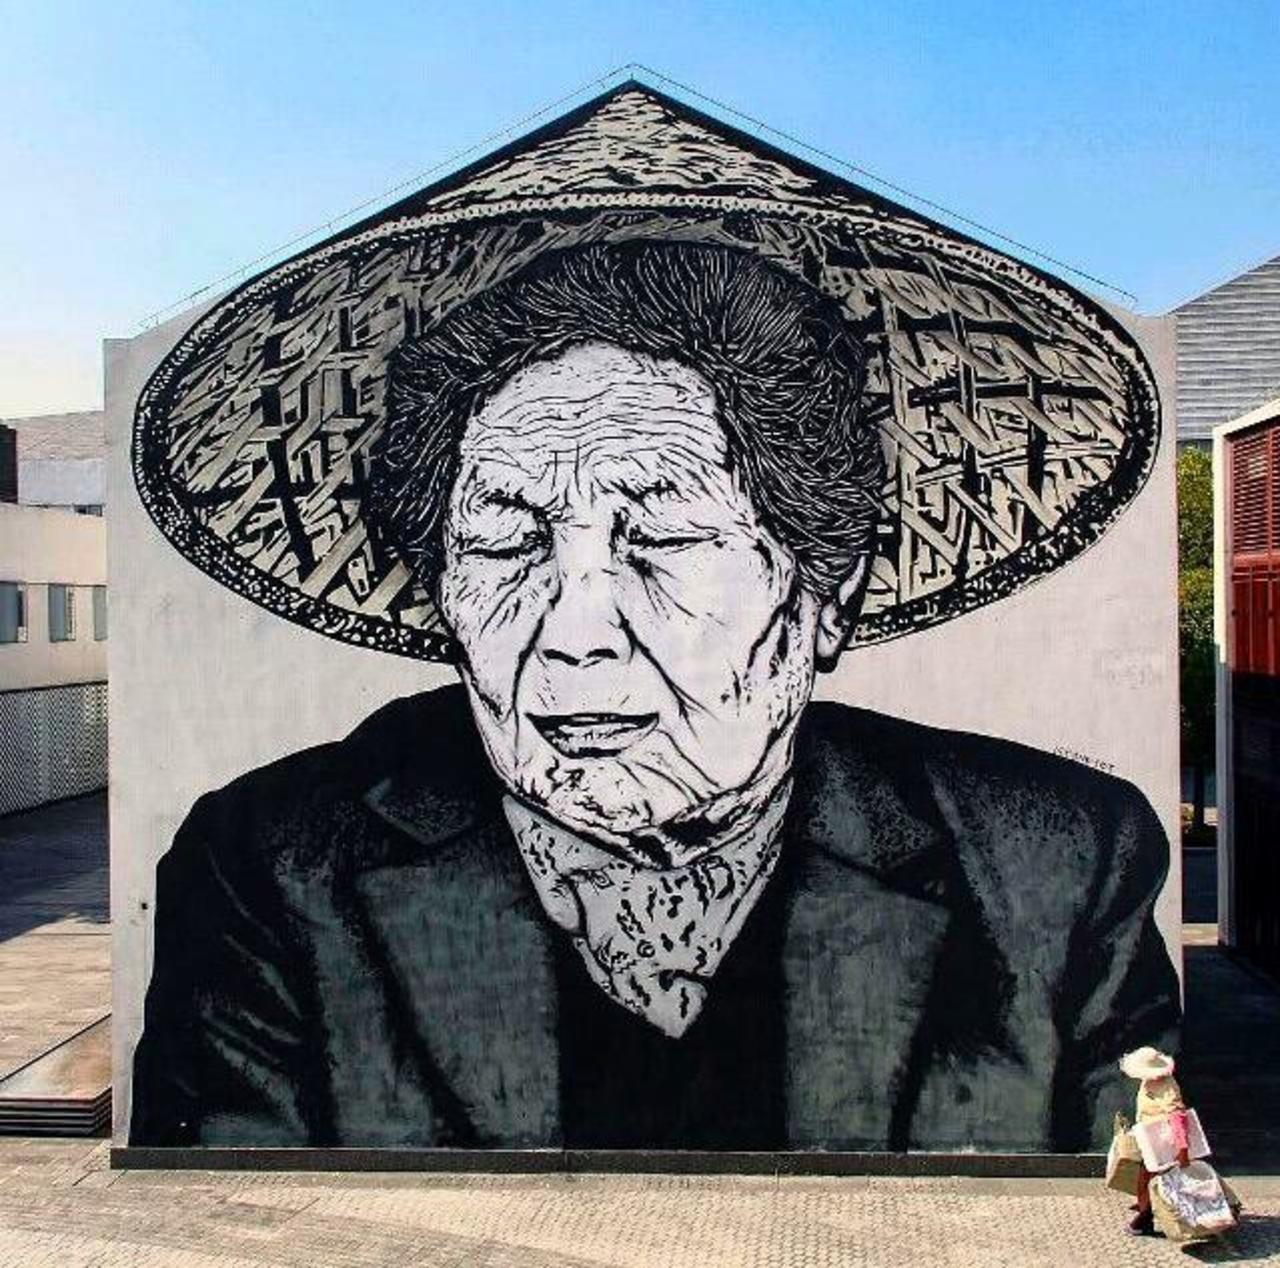 New Street Art by icy&sot in Shanghai  

#art #graffiti #mural #streetart http://t.co/Mgzswm0xTV